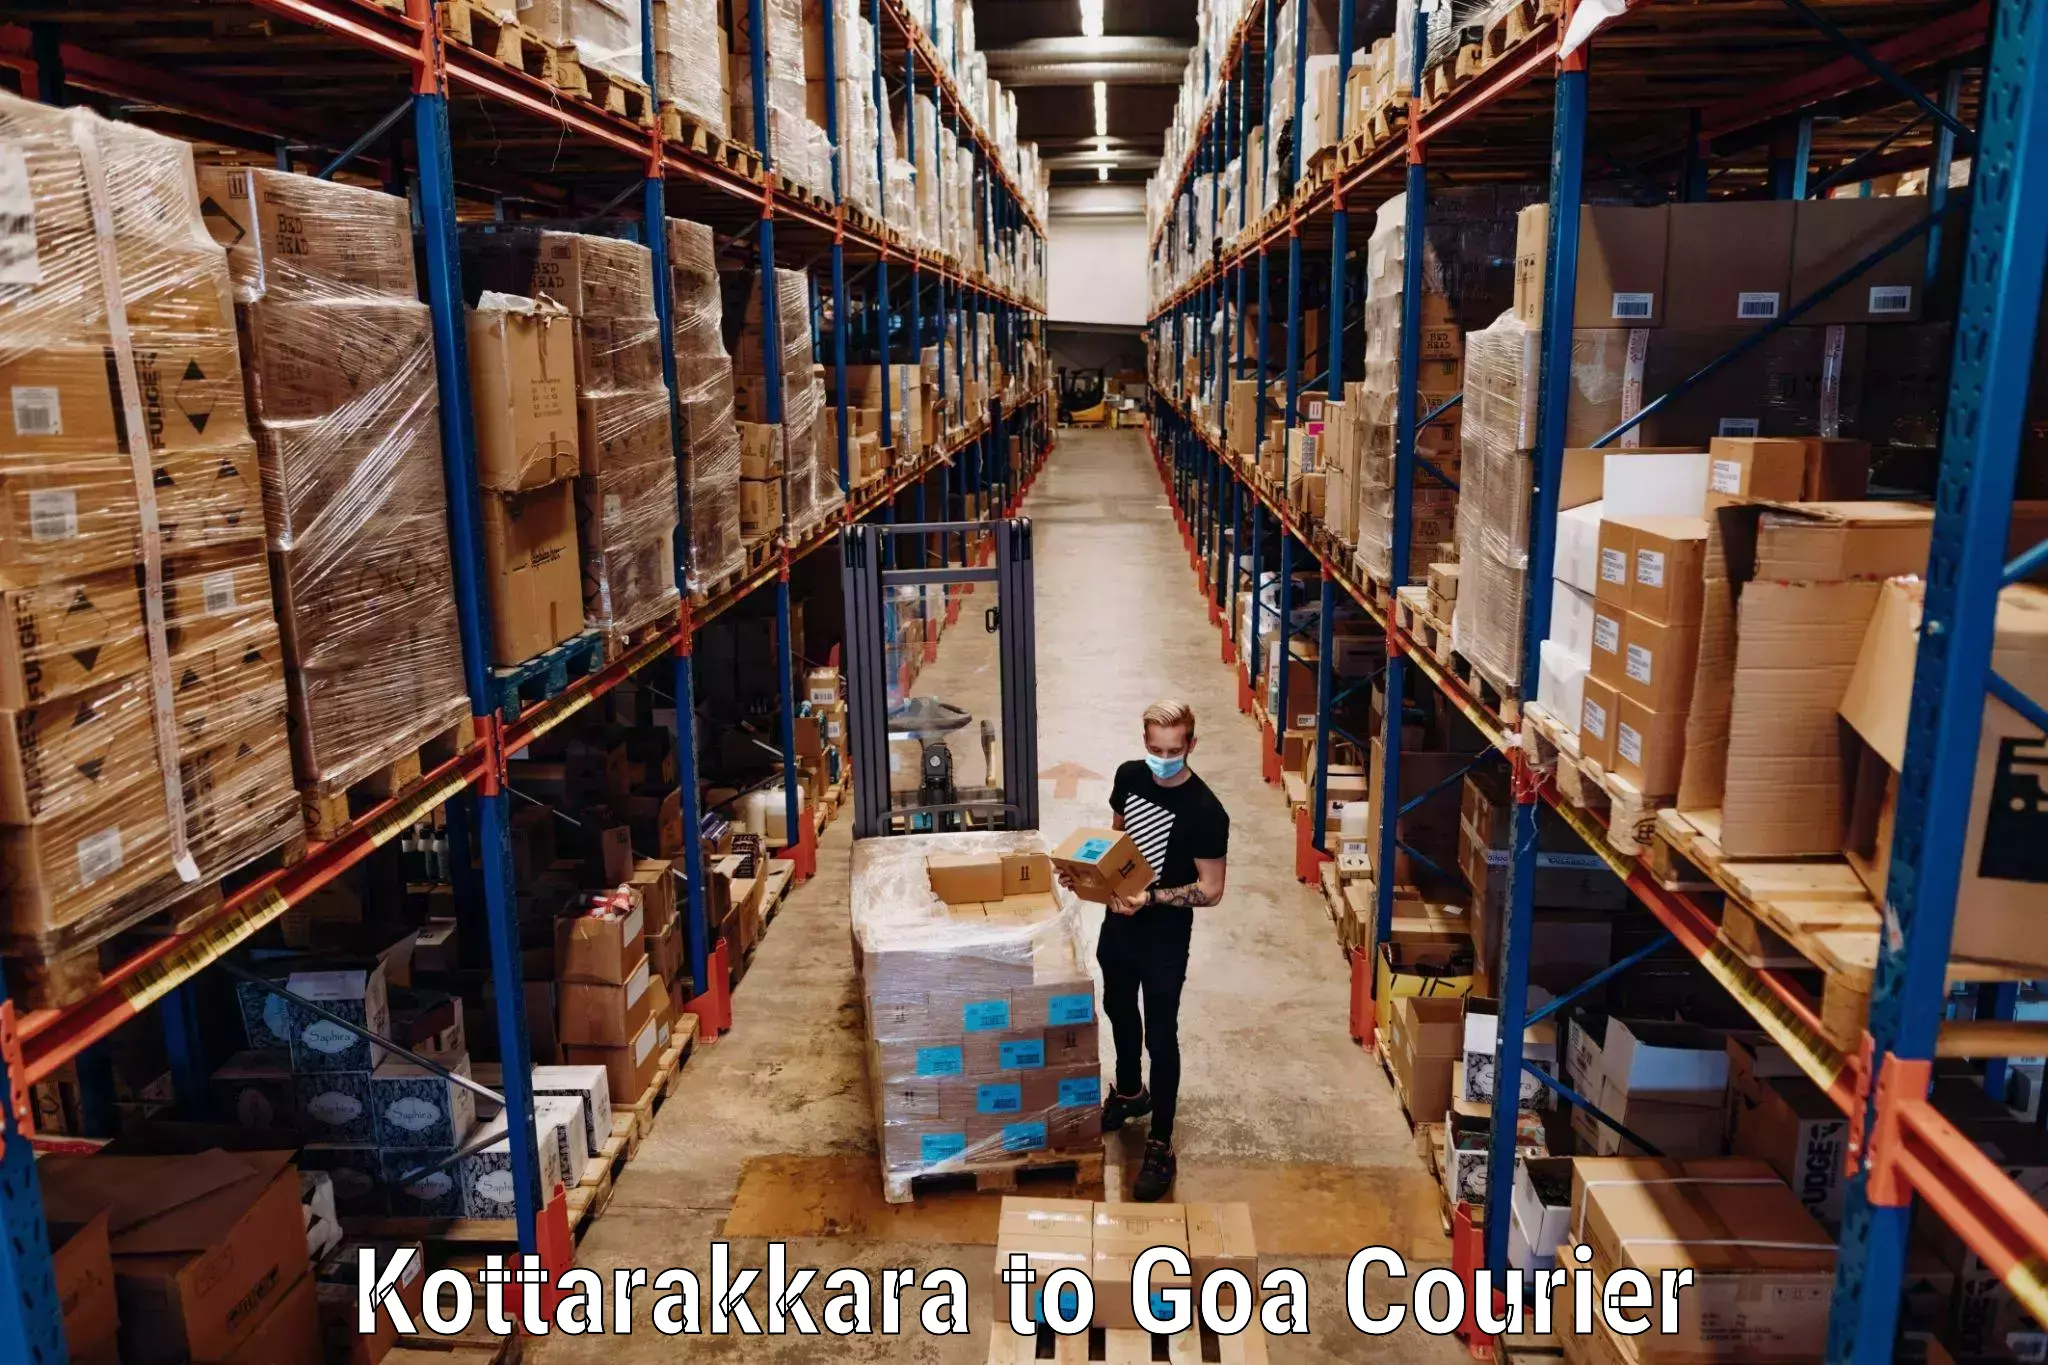 Baggage transport network Kottarakkara to Goa